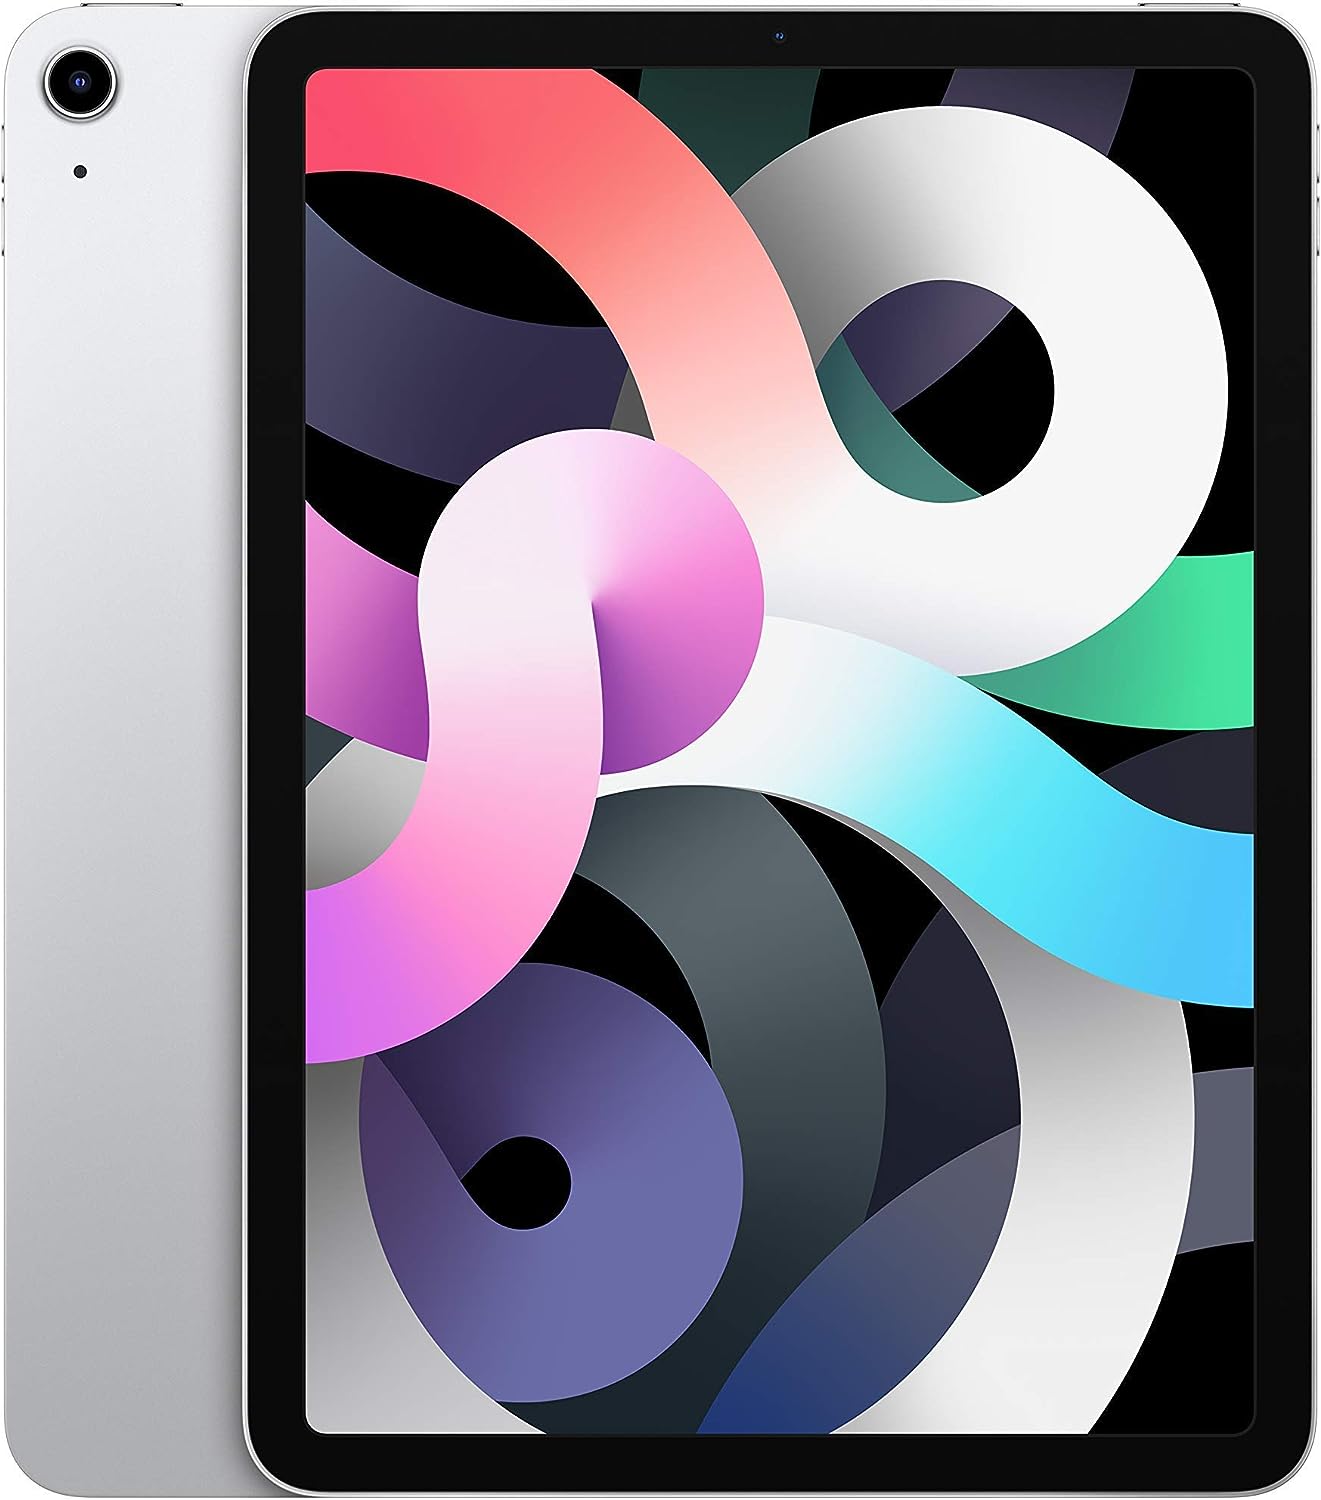 Apple iPad Air 10.9-Inch WiFi 64GB Silver Review